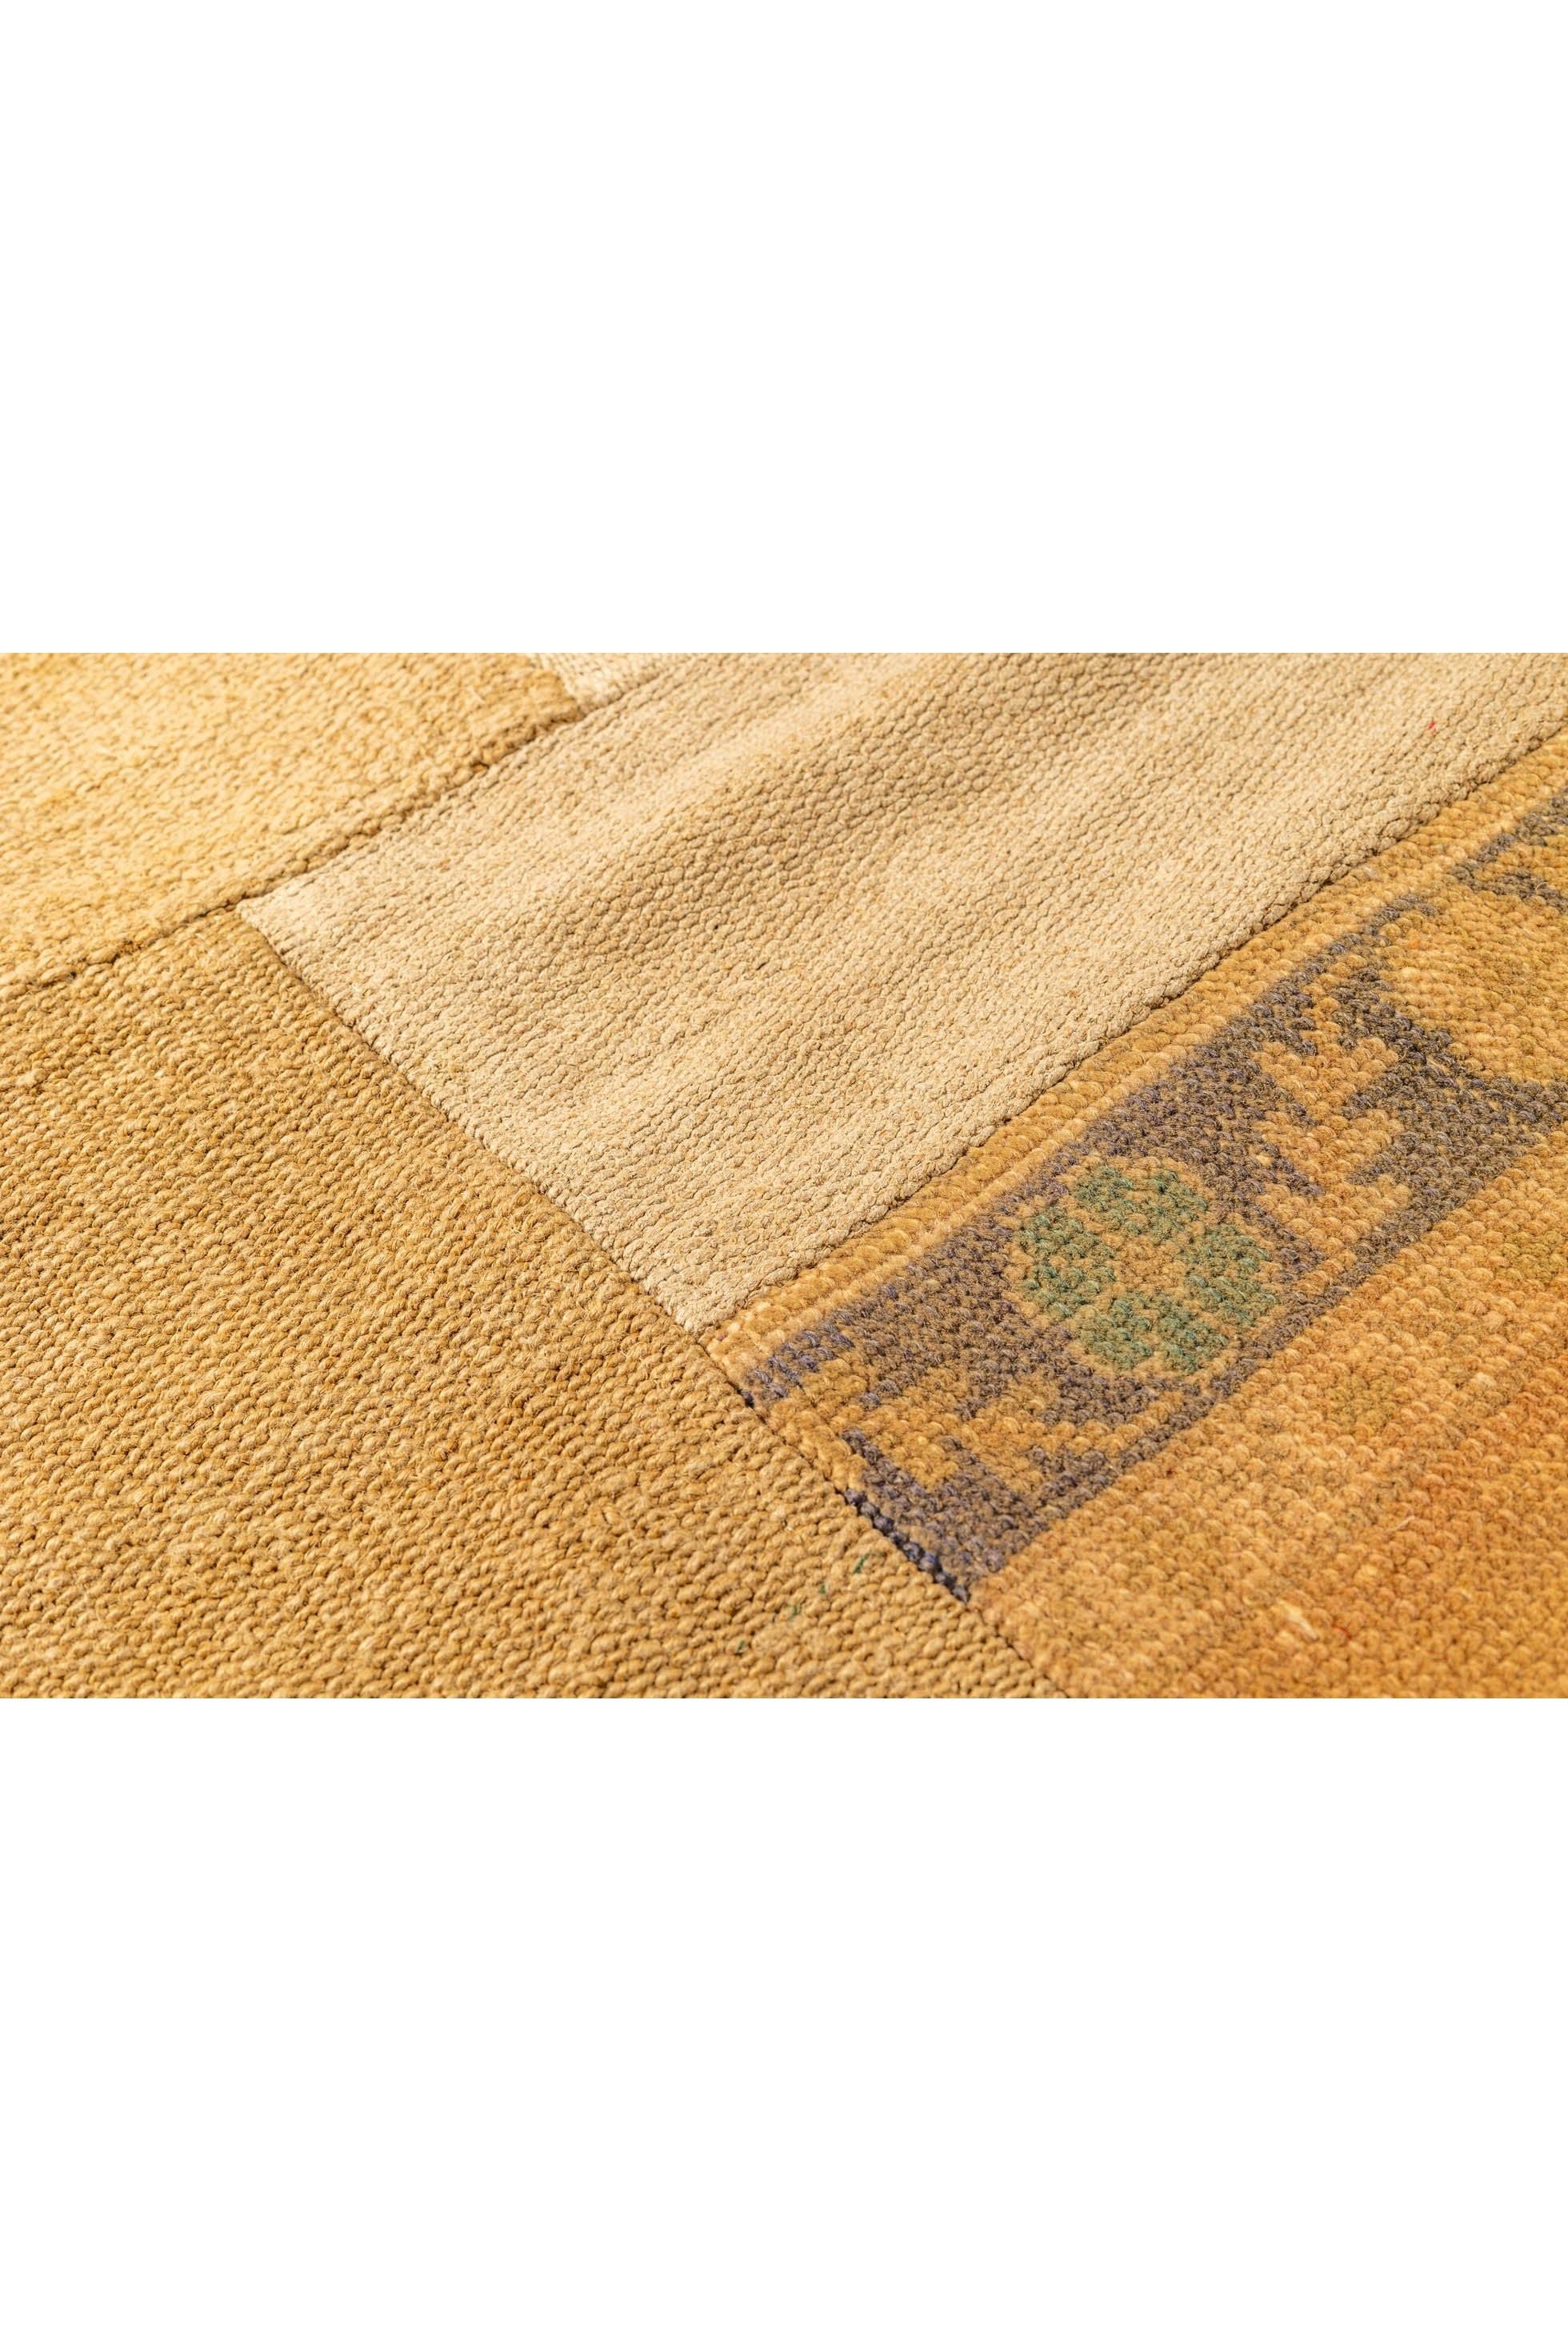 #Turkish_Carpets_Rugs# #Modern_Carpets# #Abrash_Carpets#Abrash-Turkl-071600327-290X405